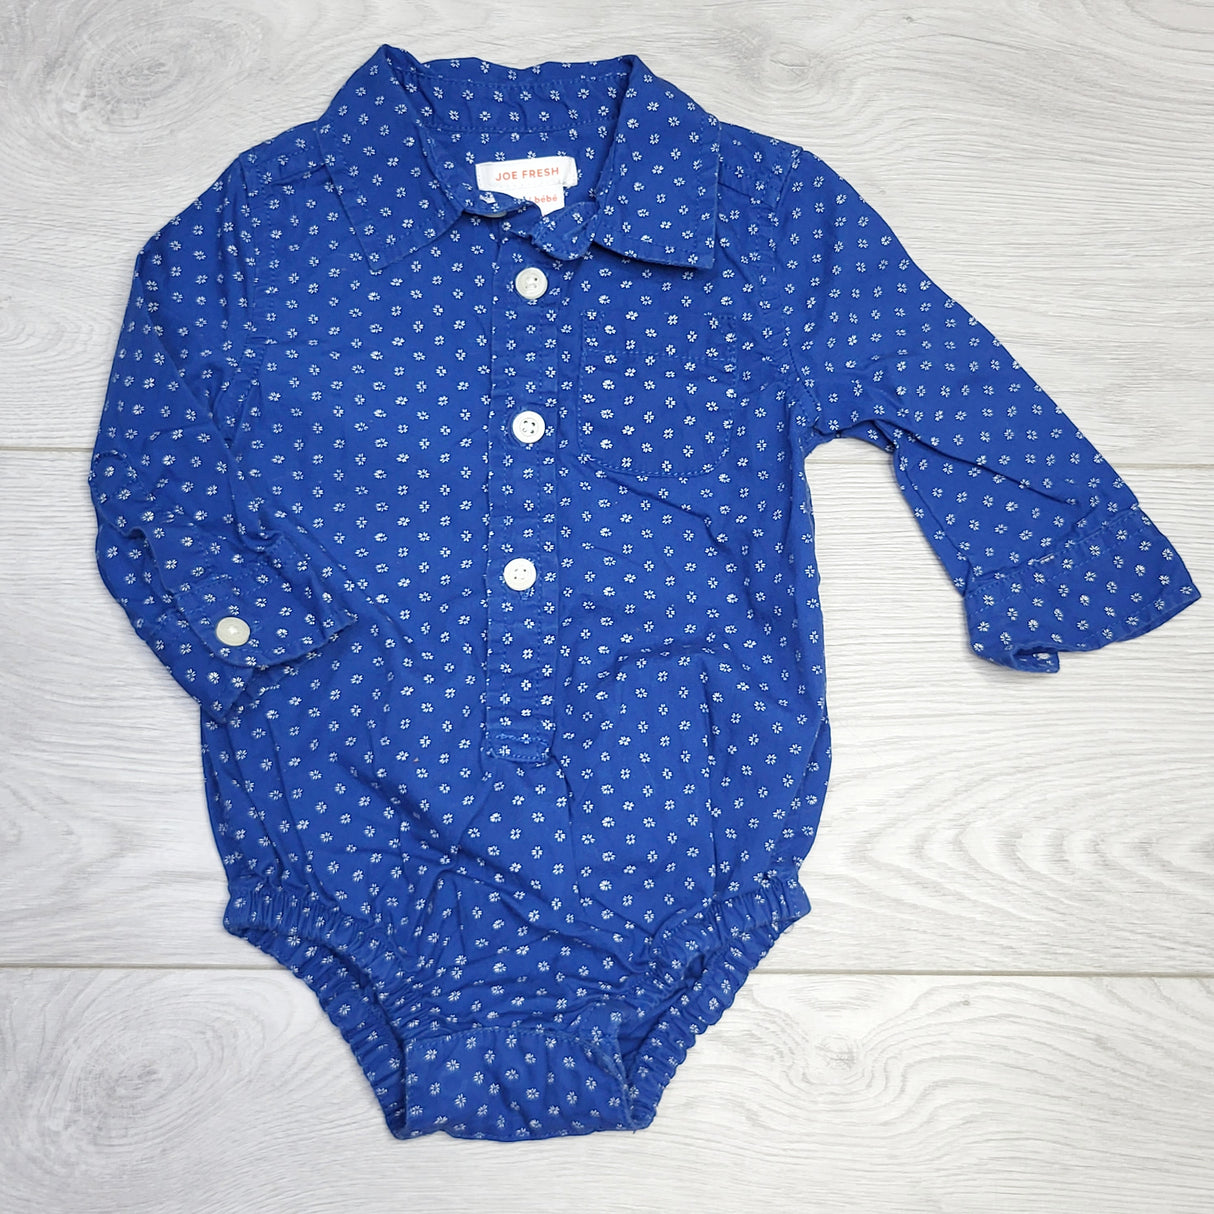 RZA2 - Joe blue patterned button down onesie. Size 3-6 months